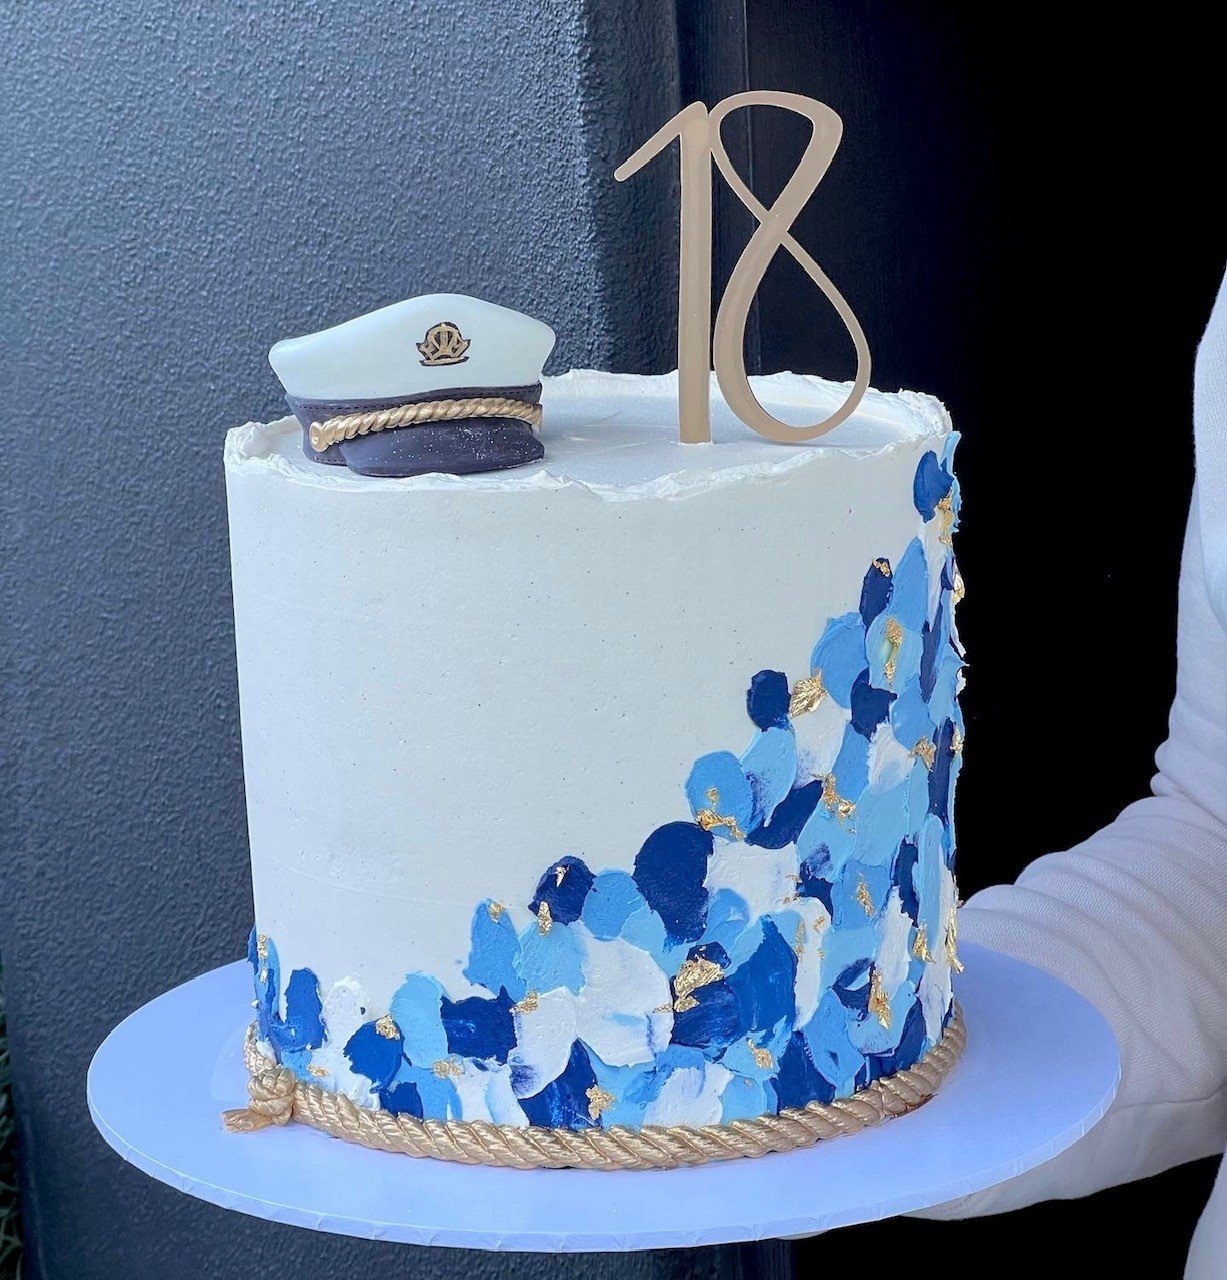 vanillapodspecialtycakes-brisbanecakes-bestcakesbrisbane-abstractcake-customcakes-cupcakes-sailorcake.jpg